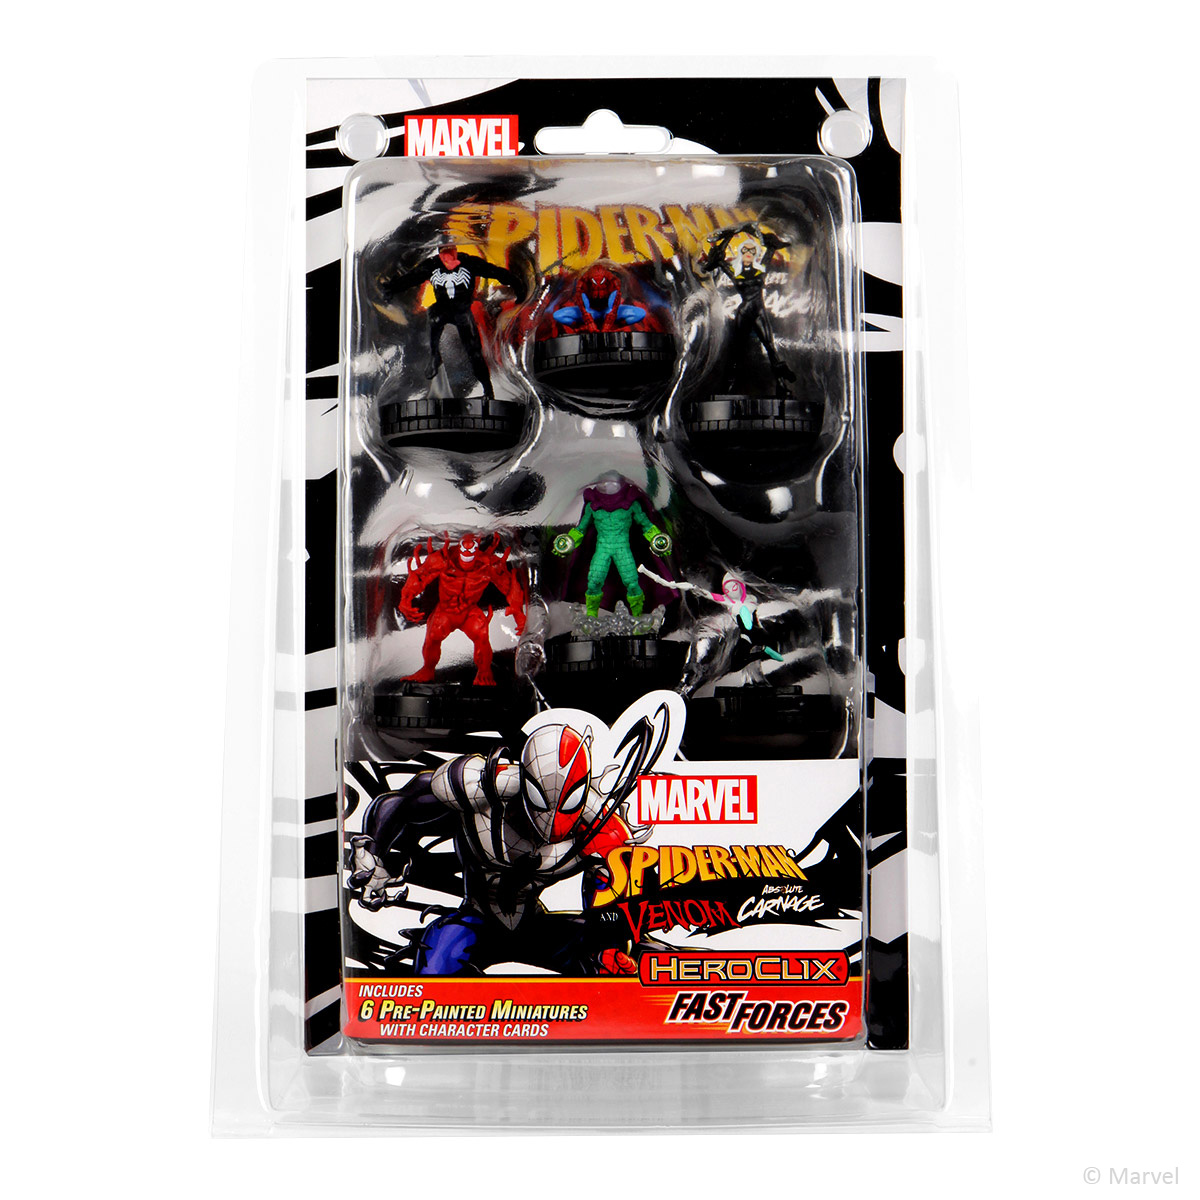 Spider-Man and Venom Absolute Carnage #005 Black Cat HeroClix